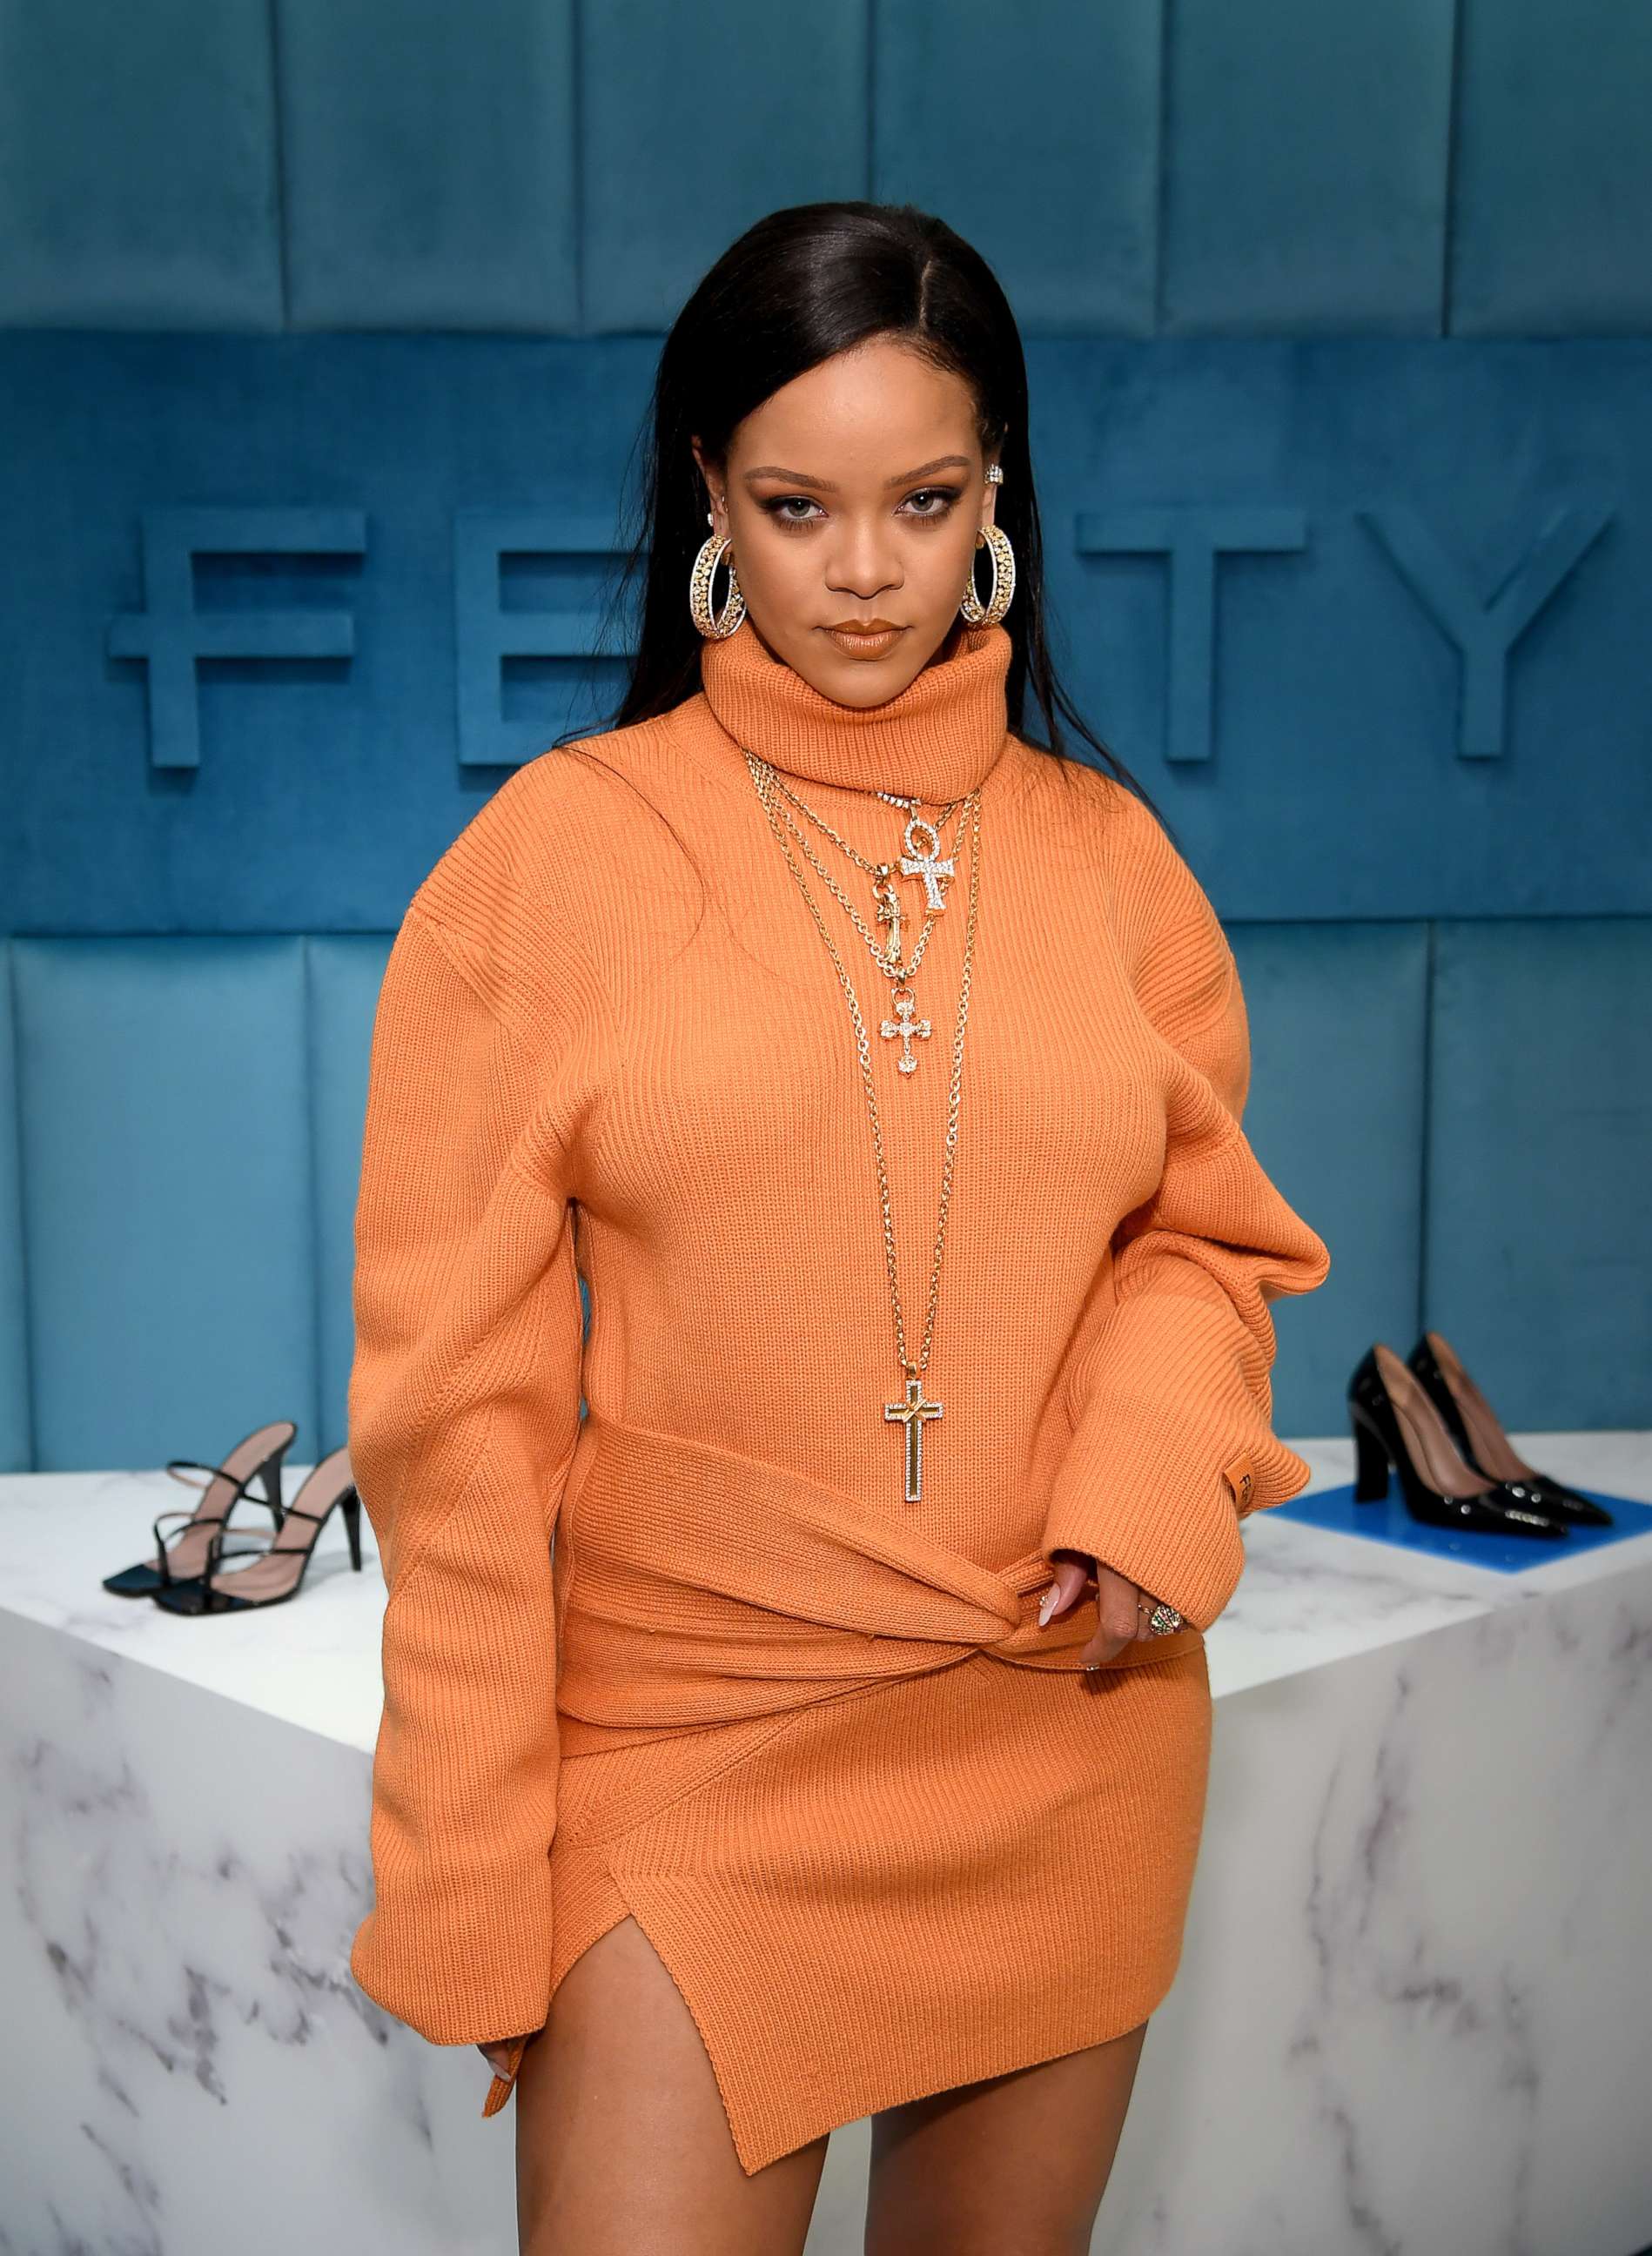 LVMH closes Rihanna's Fenty fashion line 2 years after launch - ABC News